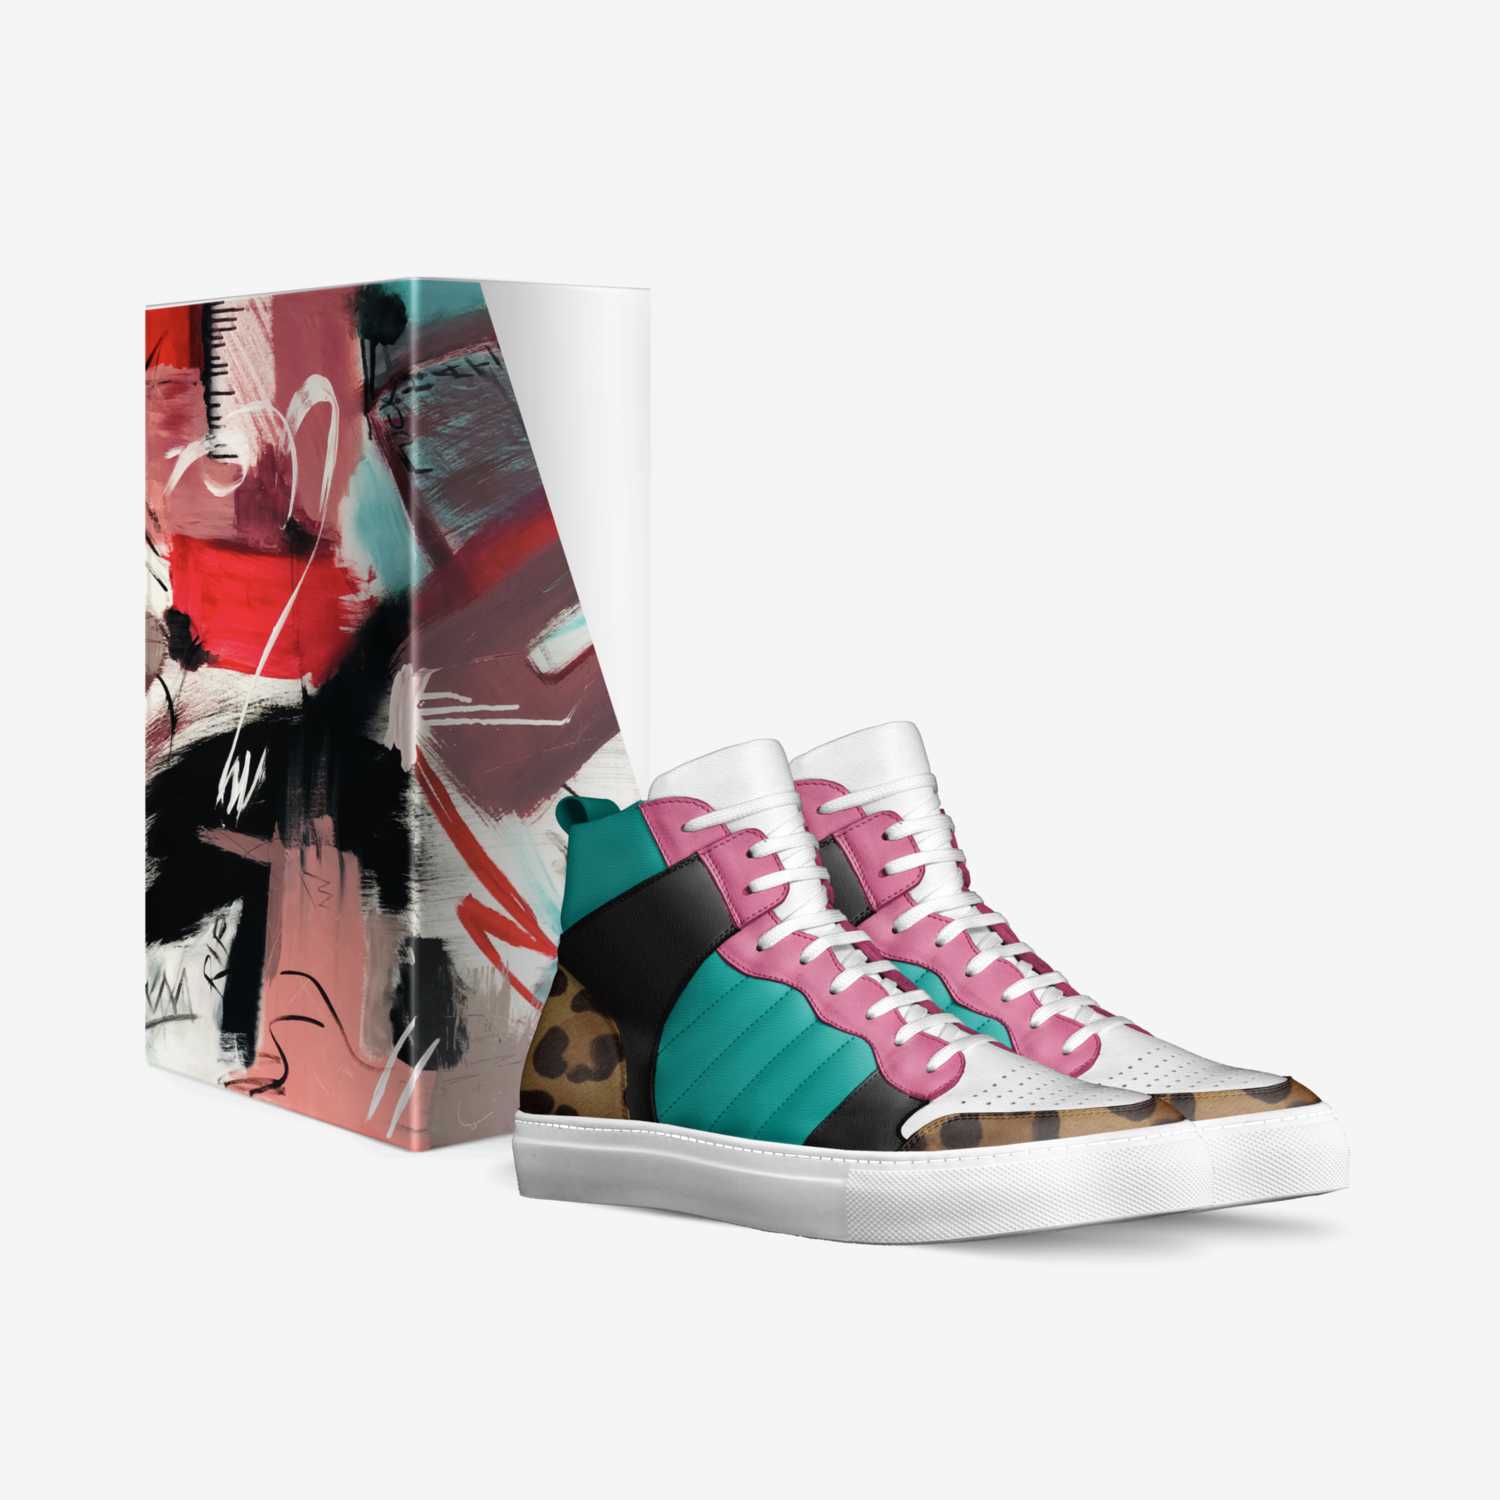 01 High custom made in Italy shoes by Kellan David | Box view